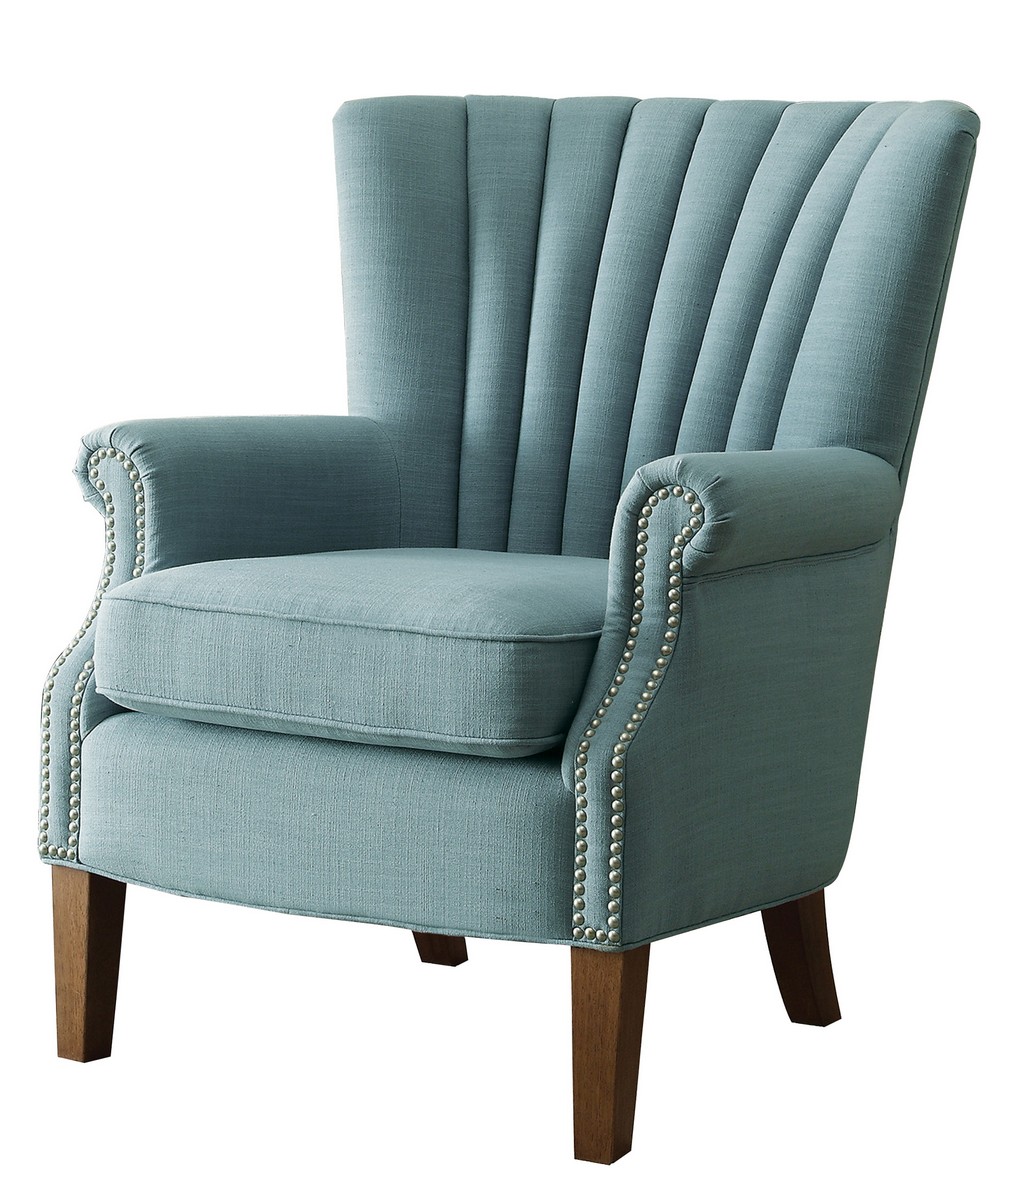 Homelegance Essex Accent Chair - Blue